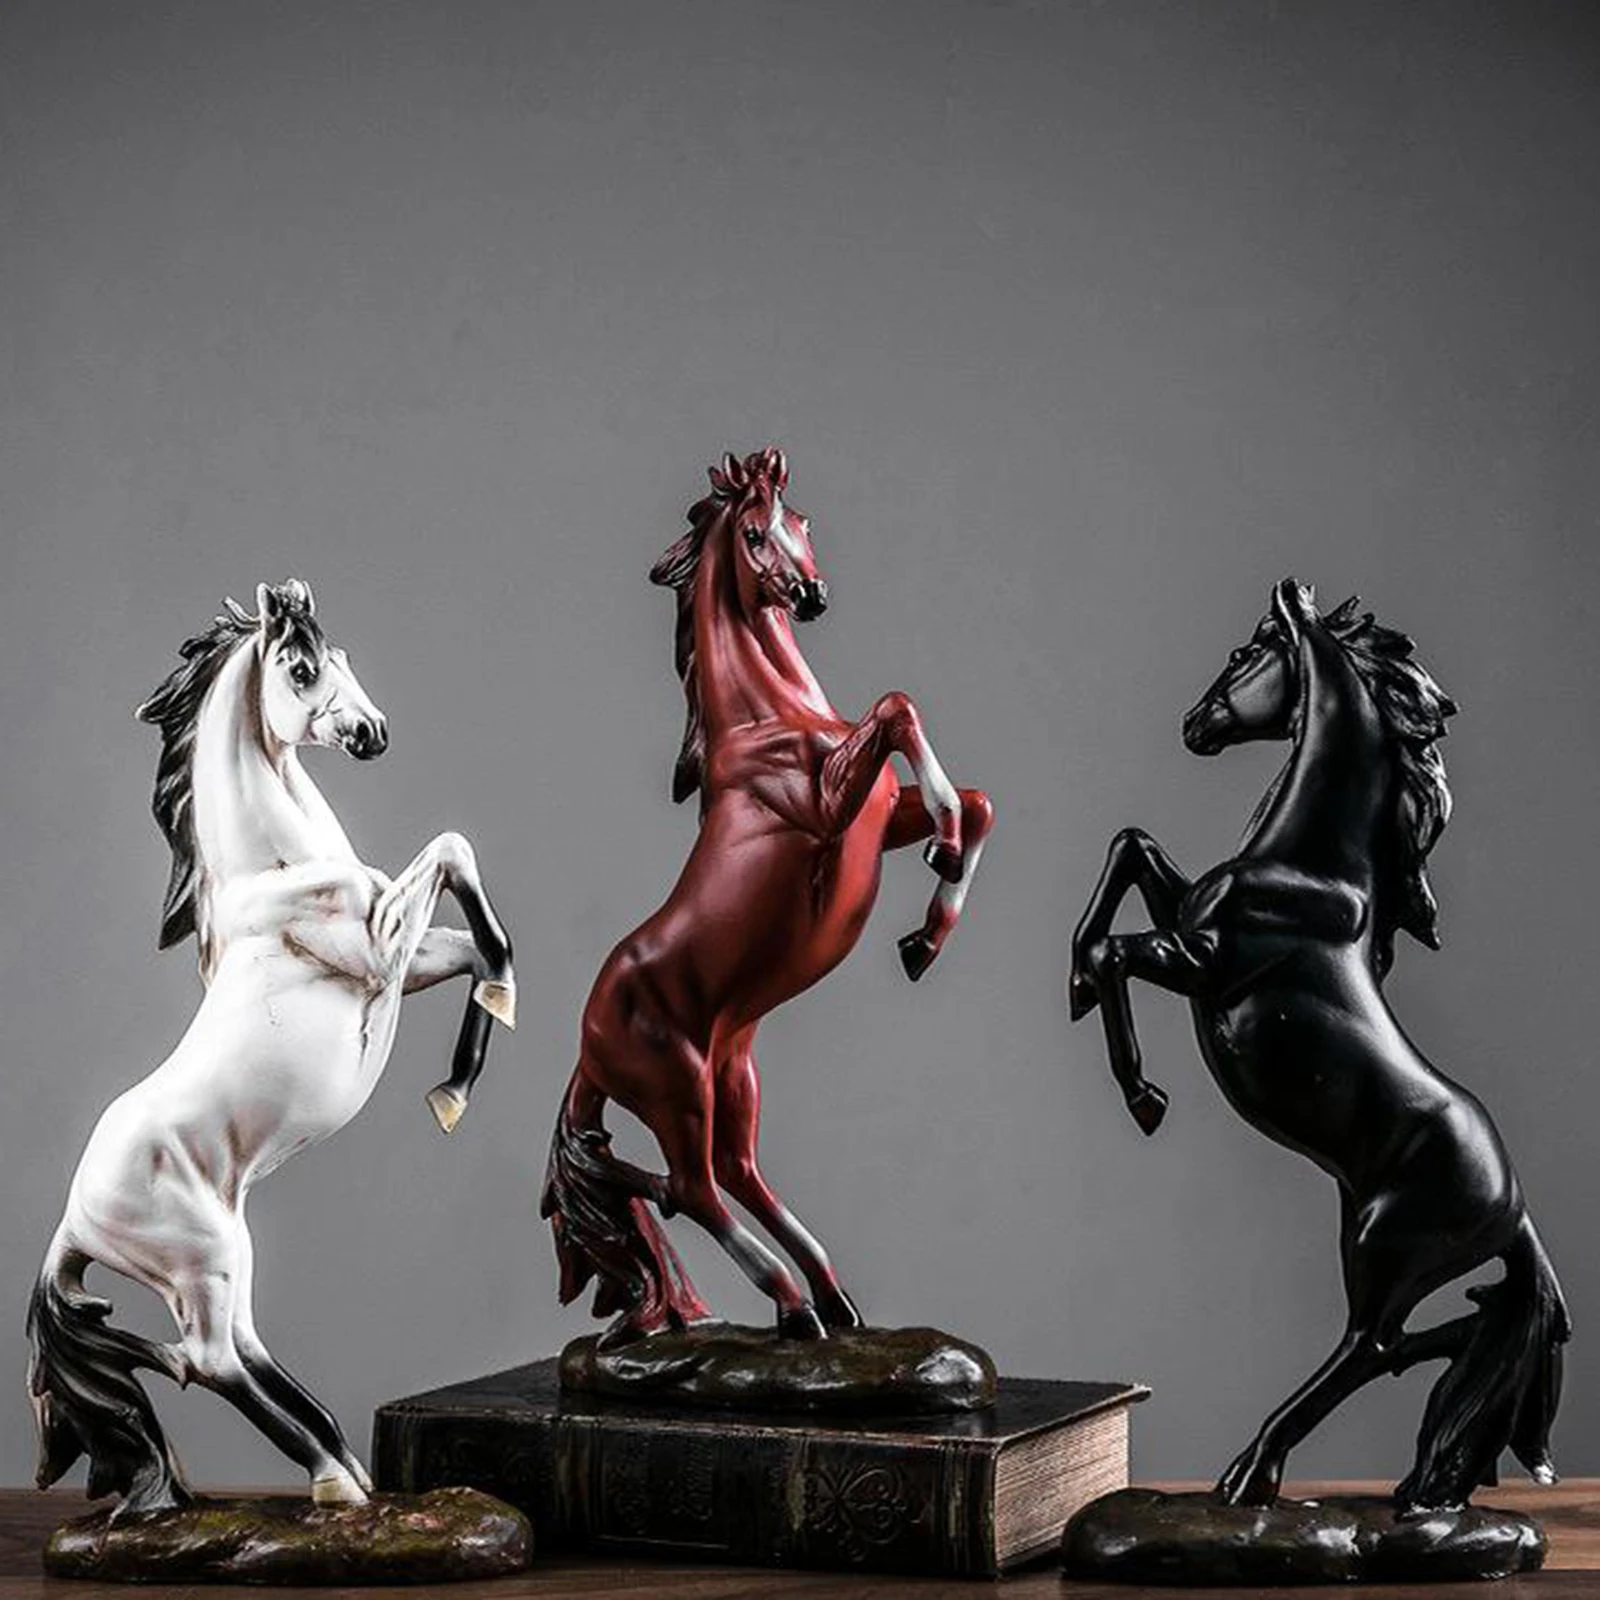 

Vivid Horses Figurine Ornaments Lifelike Hand Curved Sculpture Home Office Desktop Statue Shop Bar Counter Shelf Decoration